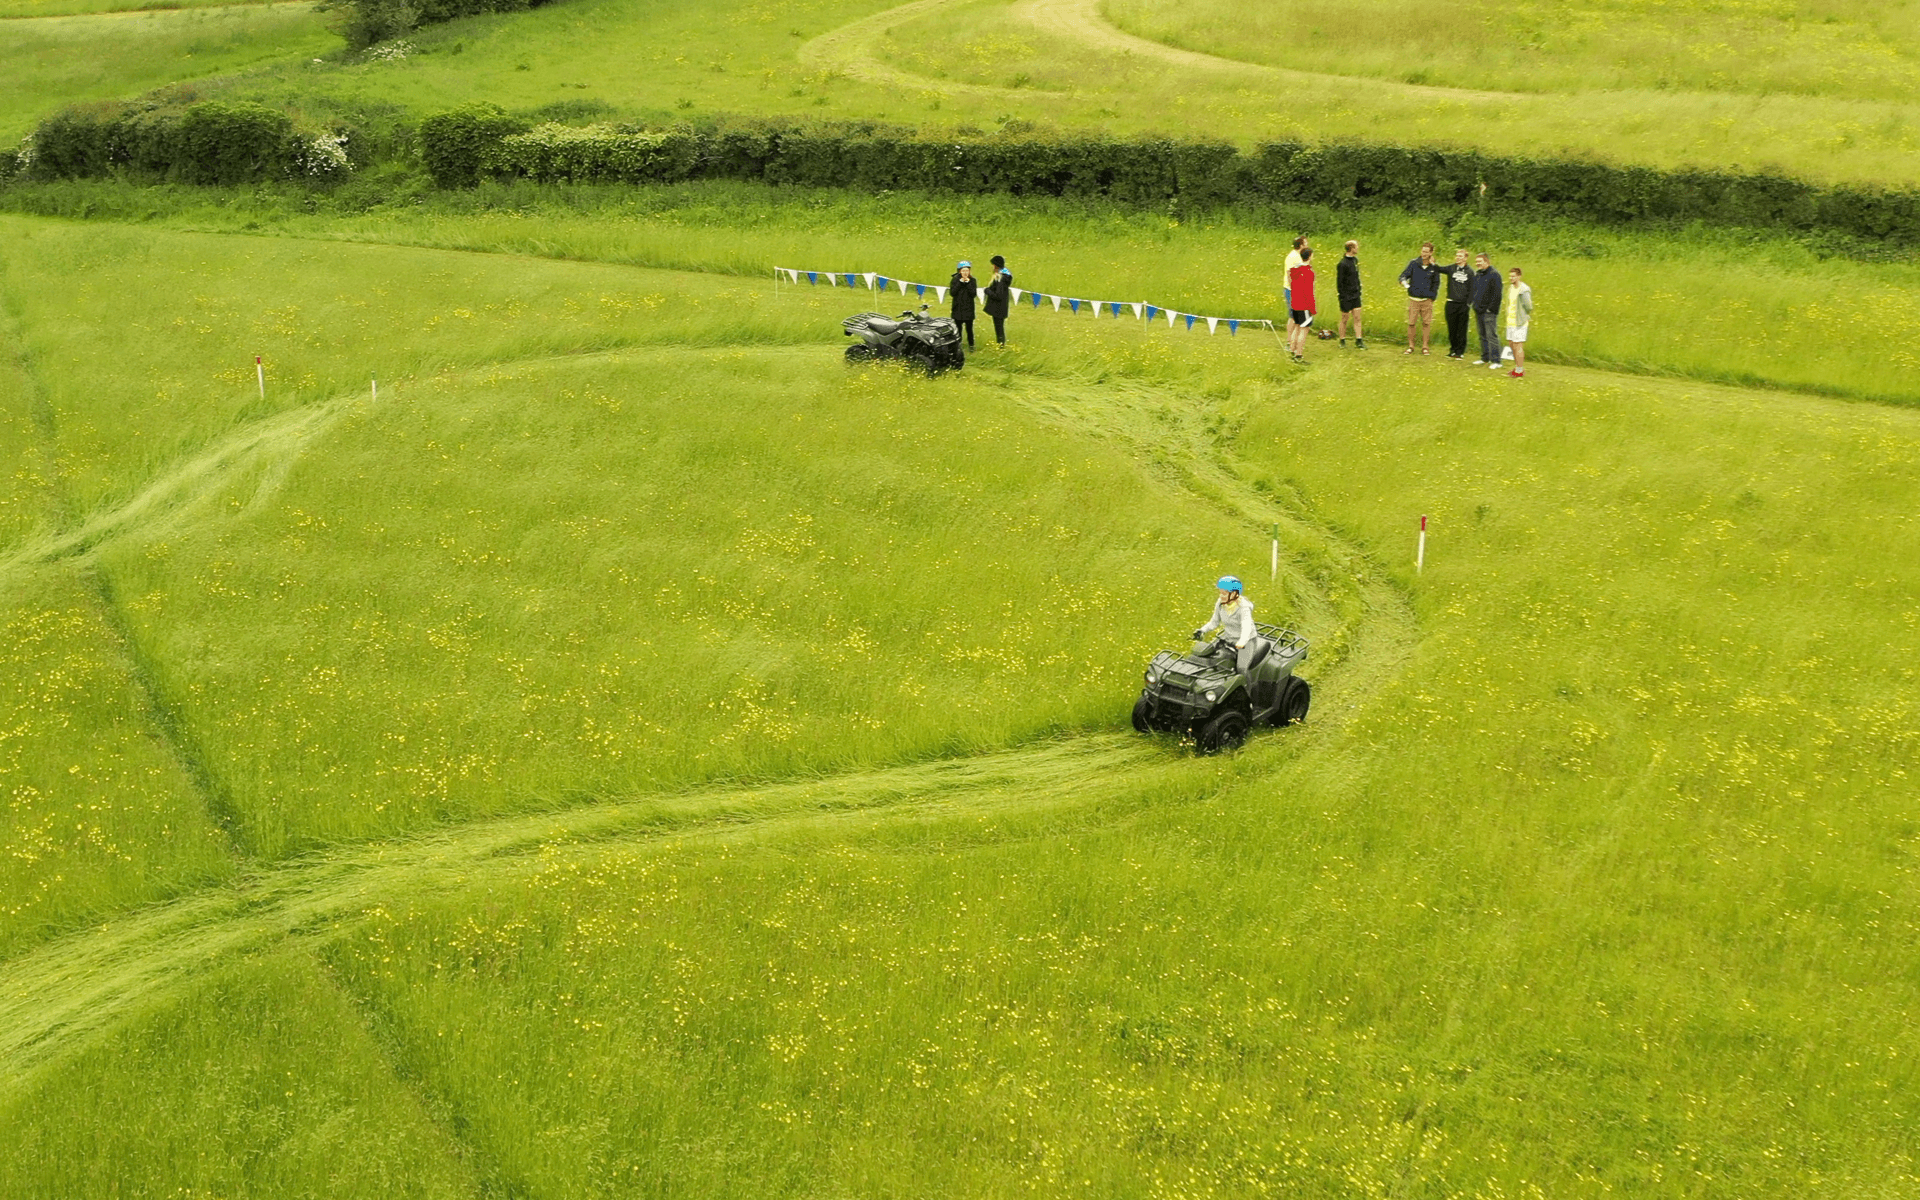 "DJI Mavic 2 Pro" aerial drone photo of "Hydrock" employee on a quadbike in a field at corporate event in almondsbury bristol